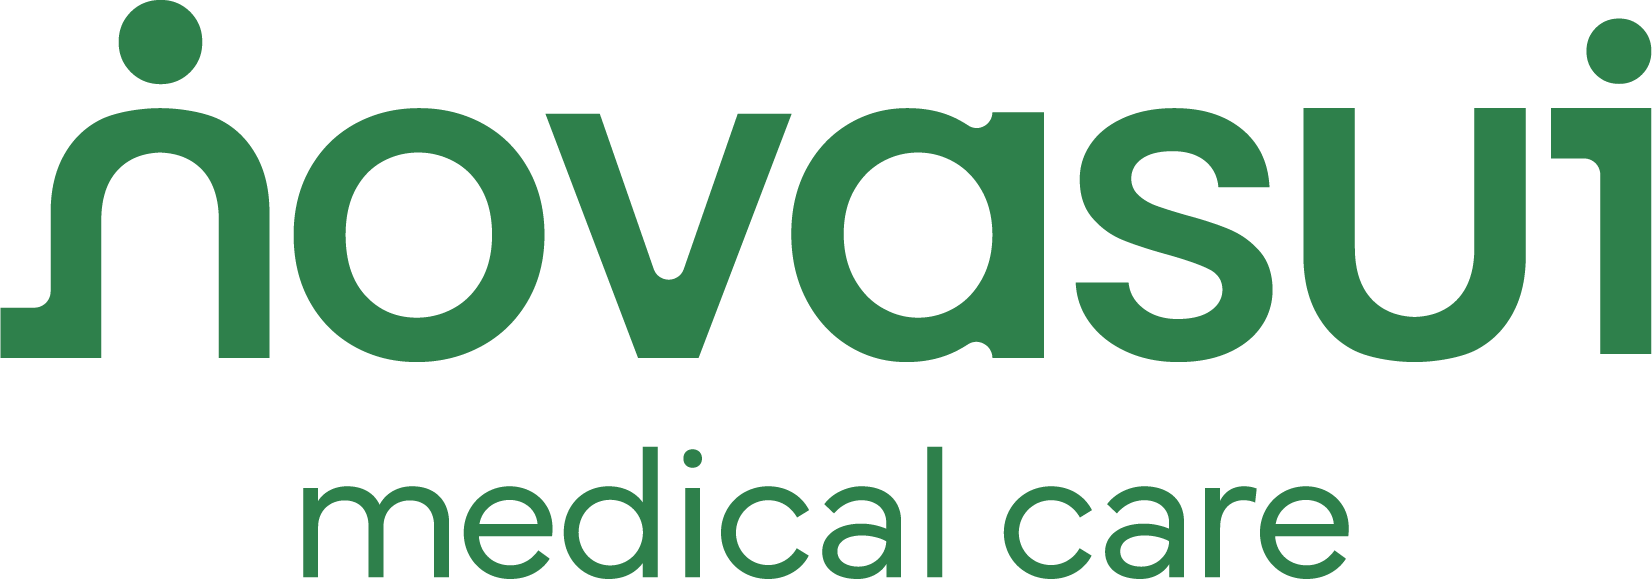 Novasui Medical Care